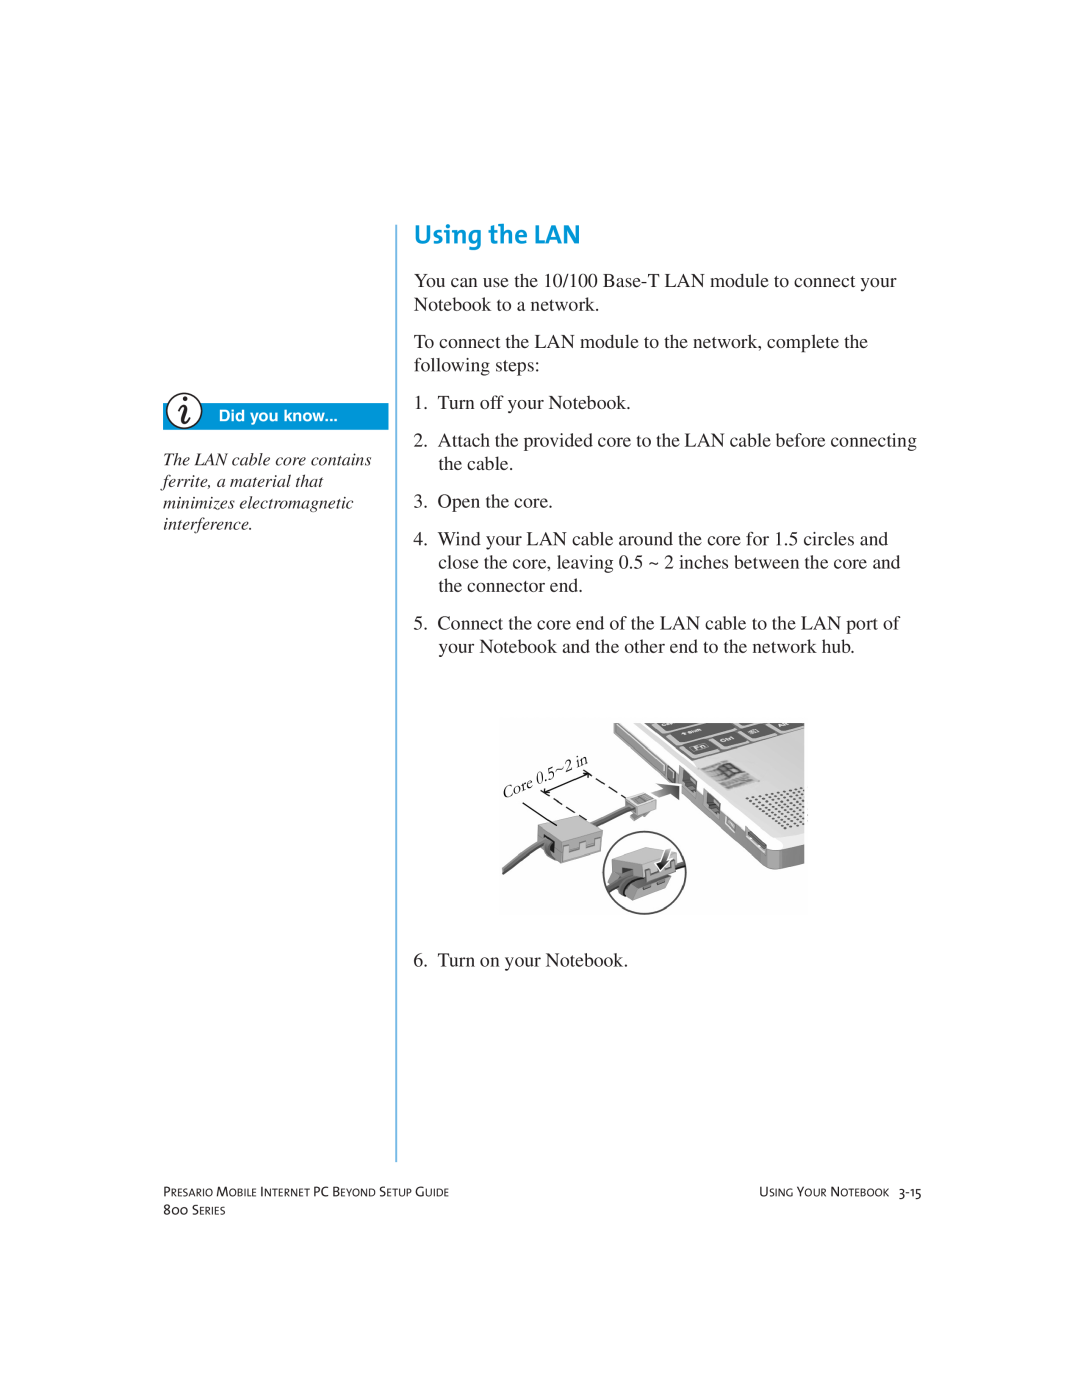 Compaq 800 manual Using the LAN 